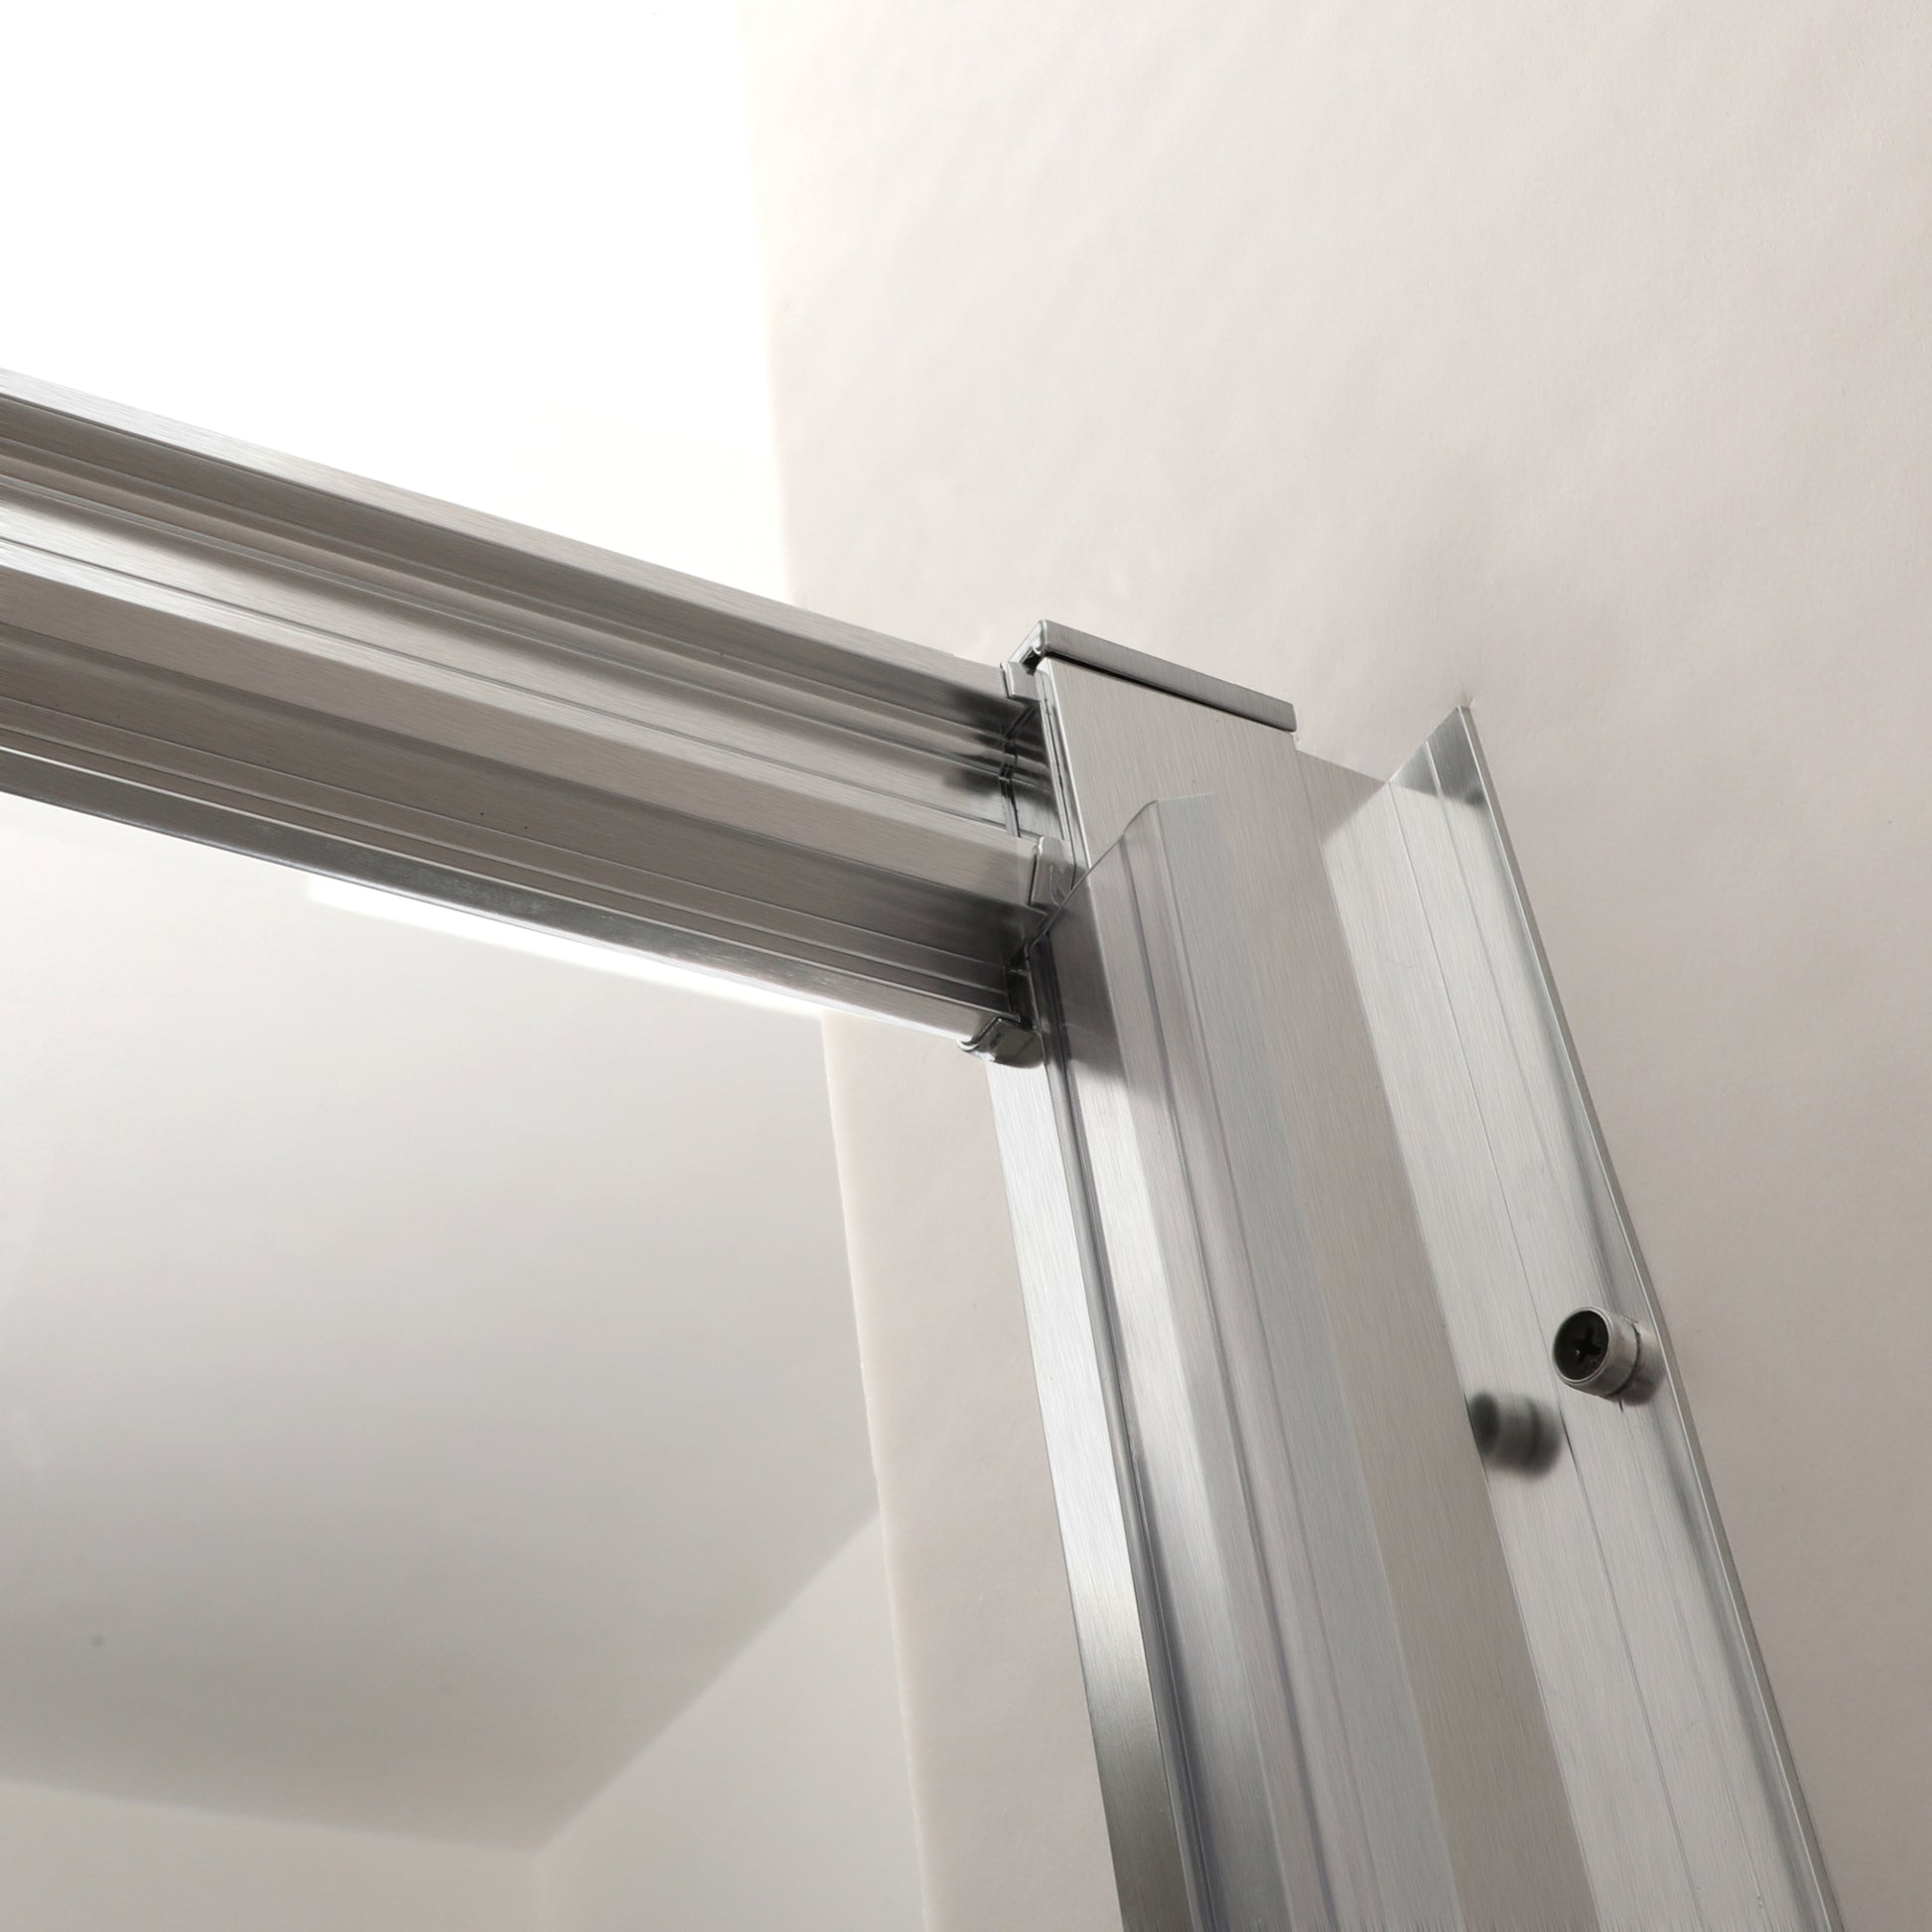 Shower Door 60" W x 72"H Single Sliding Bypass Shower brushed nickel-glass